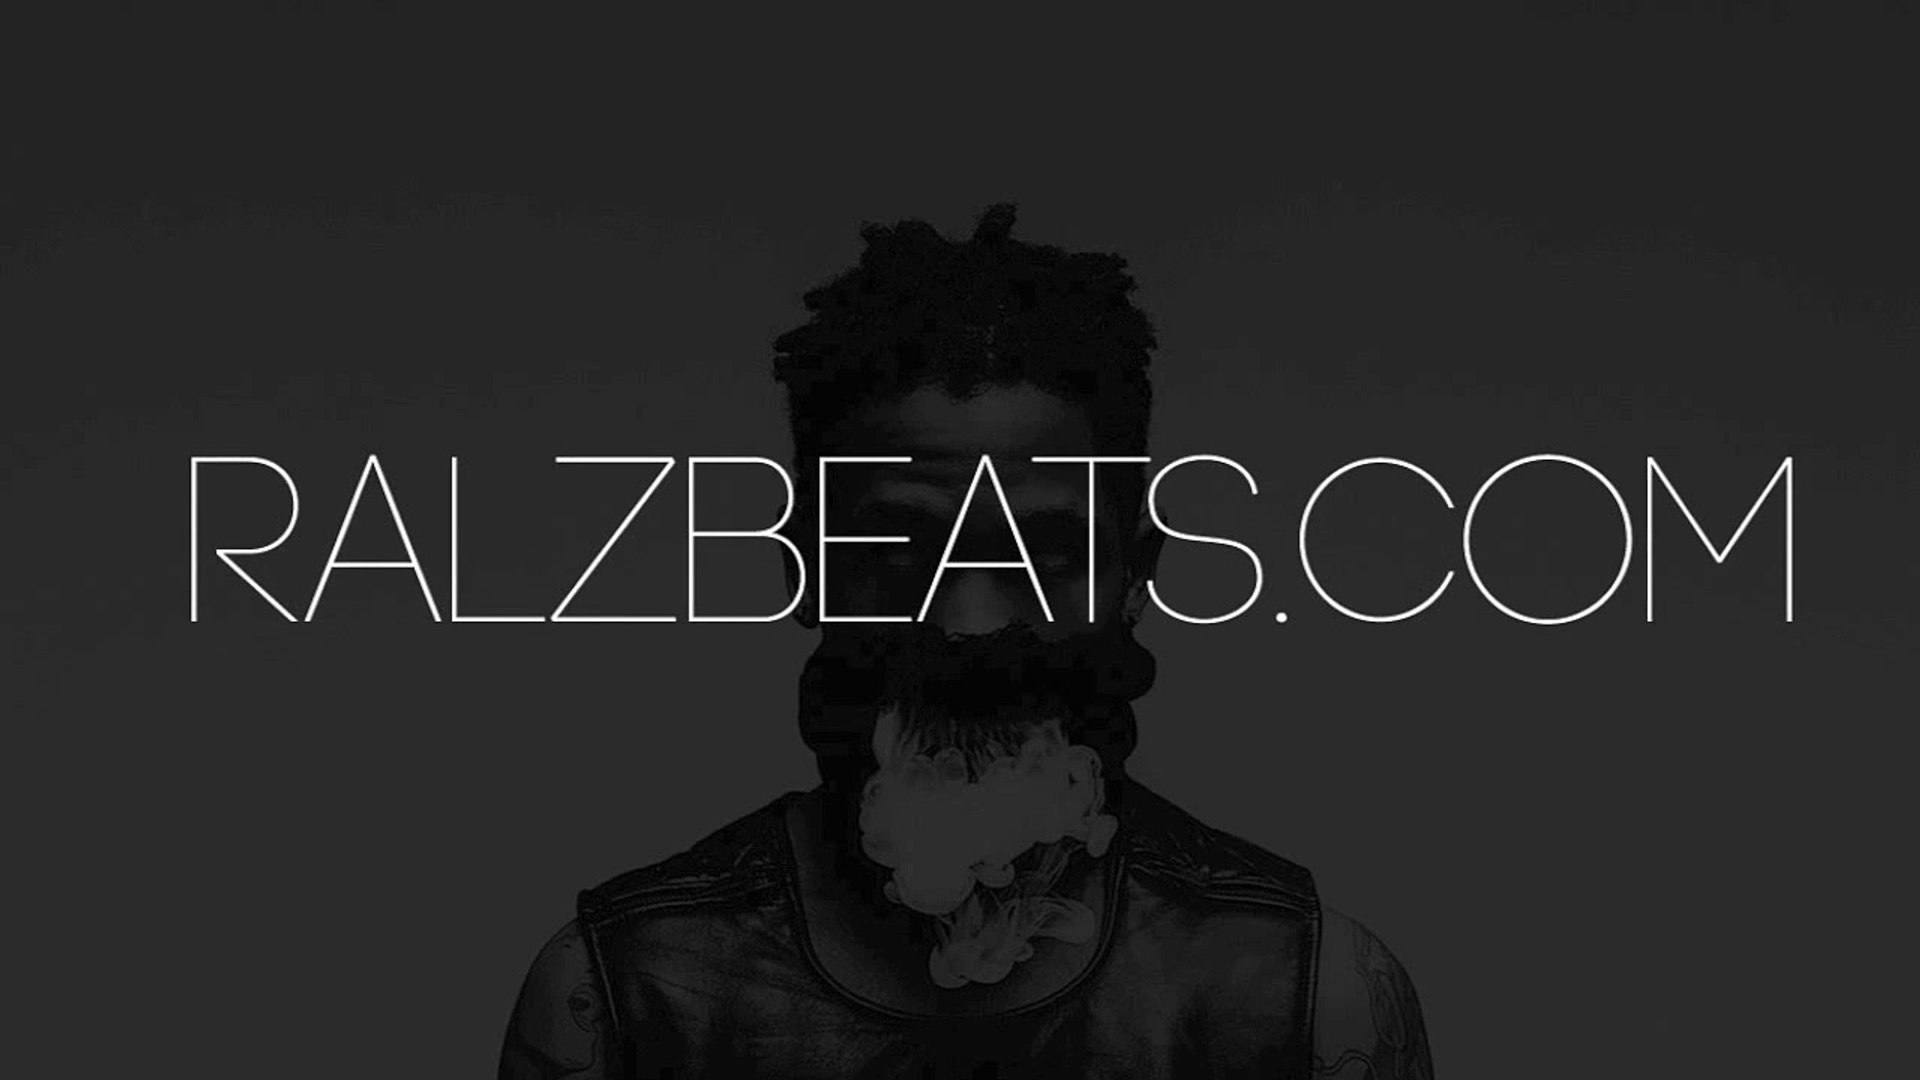 Hold On - Trap Hip Hop Beat (Travis Scott Type Beat) Instrumental 2015